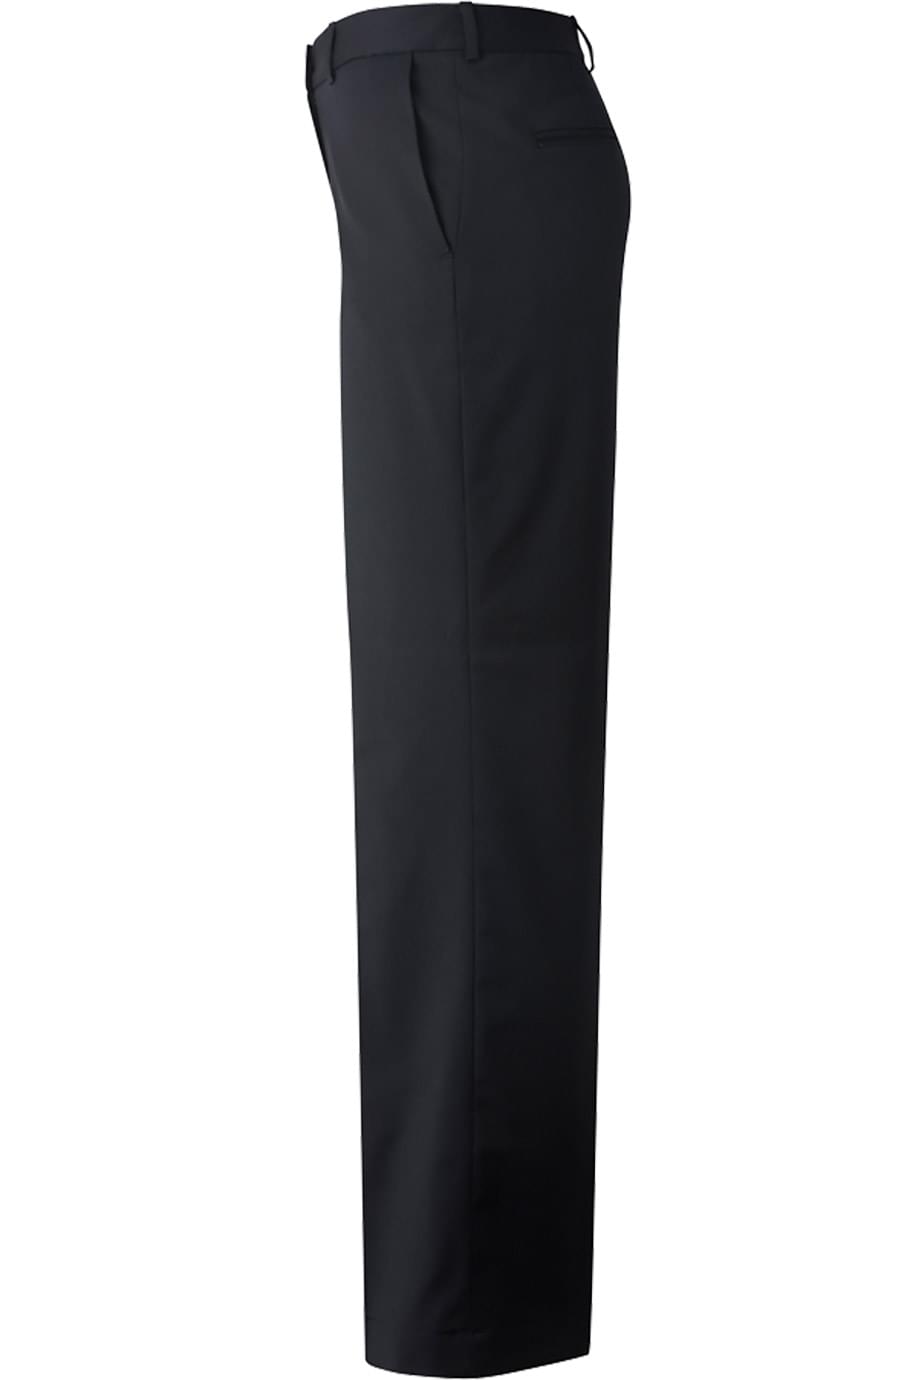 Henry Segal Women's Black Dress Pants - 20